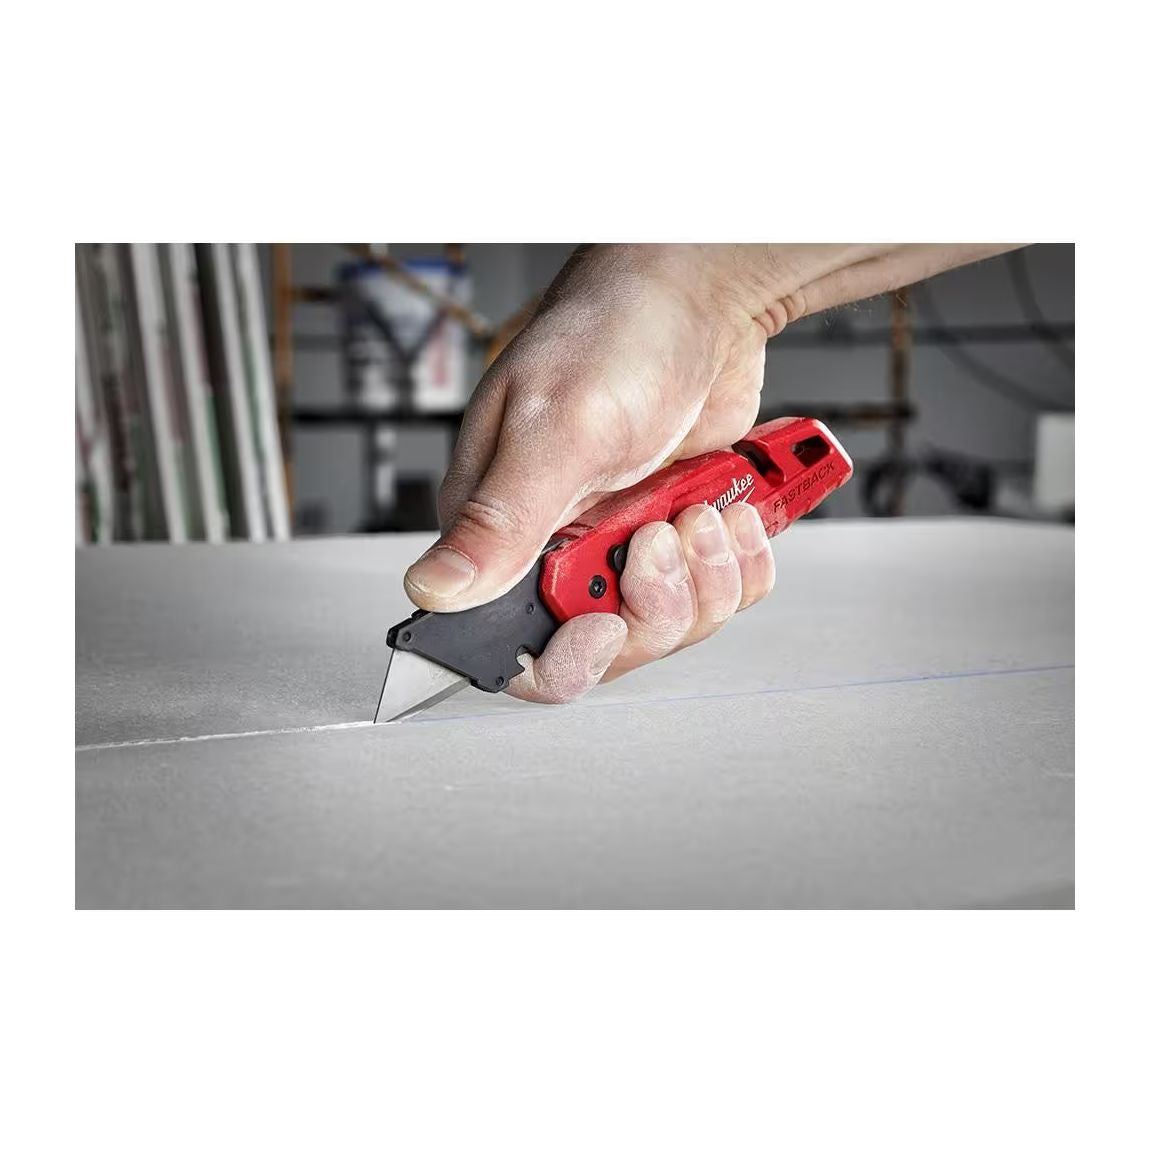 48-22-1503 - FASTBACK Folding Utility Knife Set